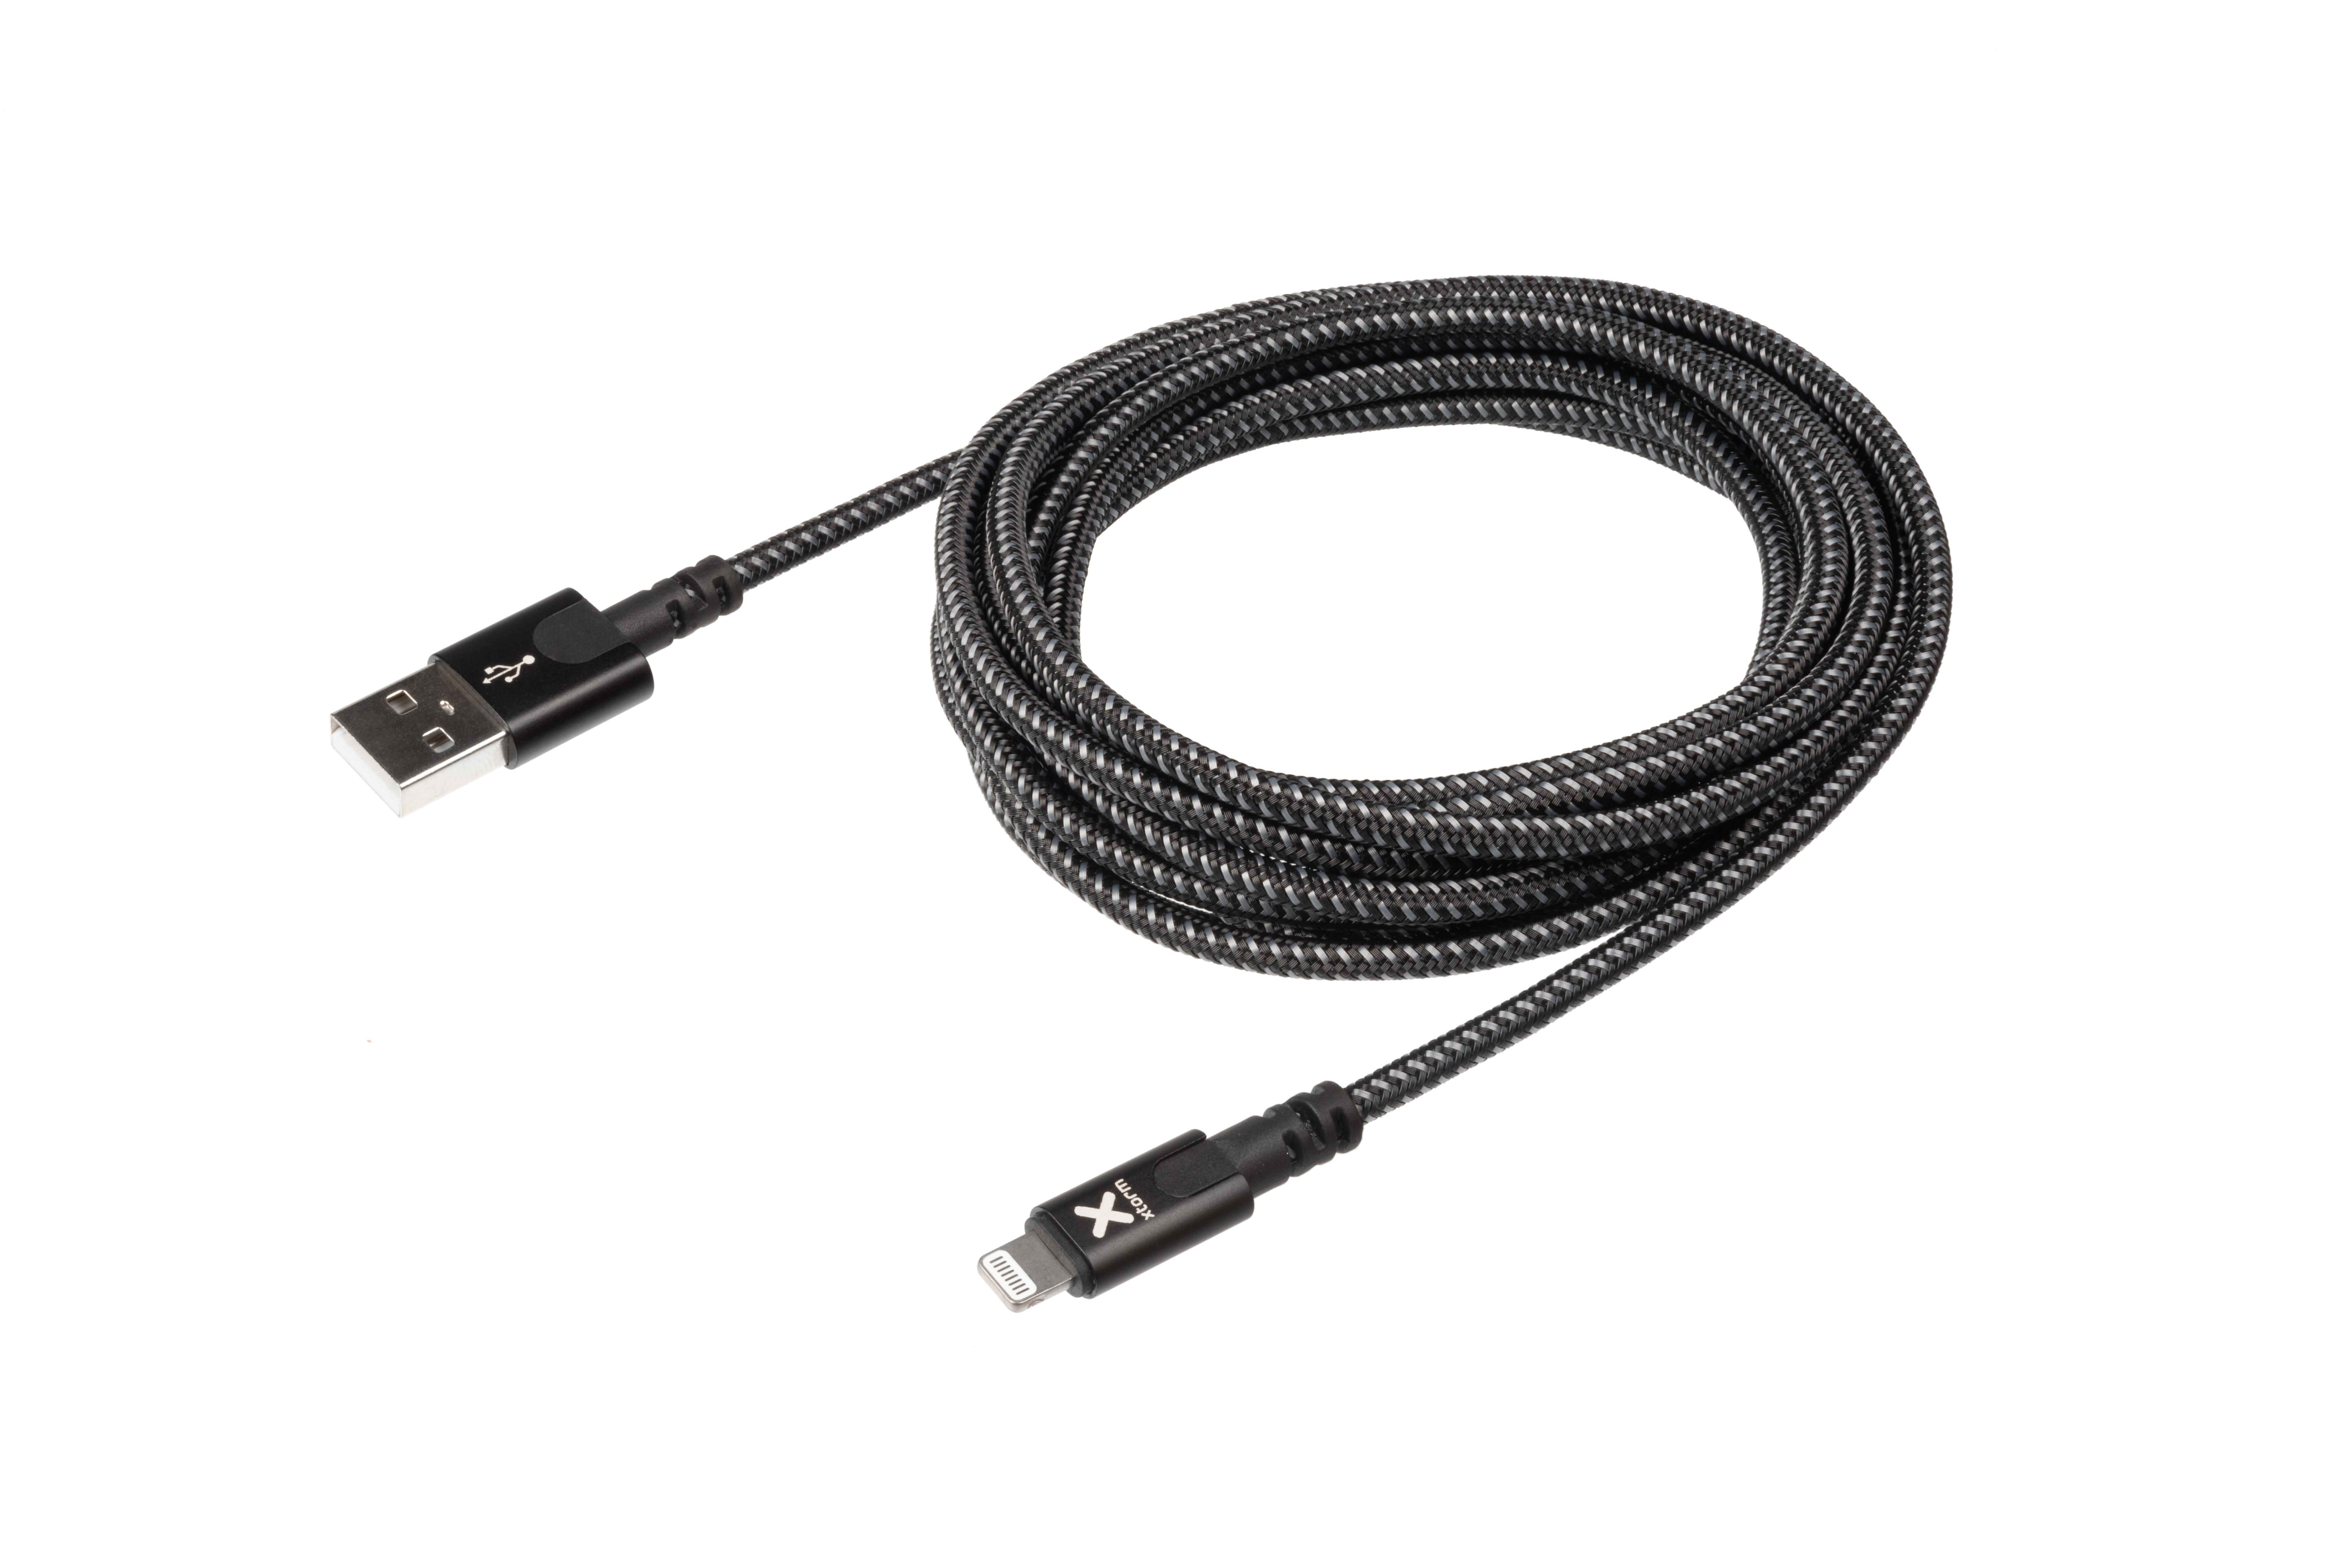 Kabel Schwarz Original Kabel auf USB (1m) XTORM Lightning USB